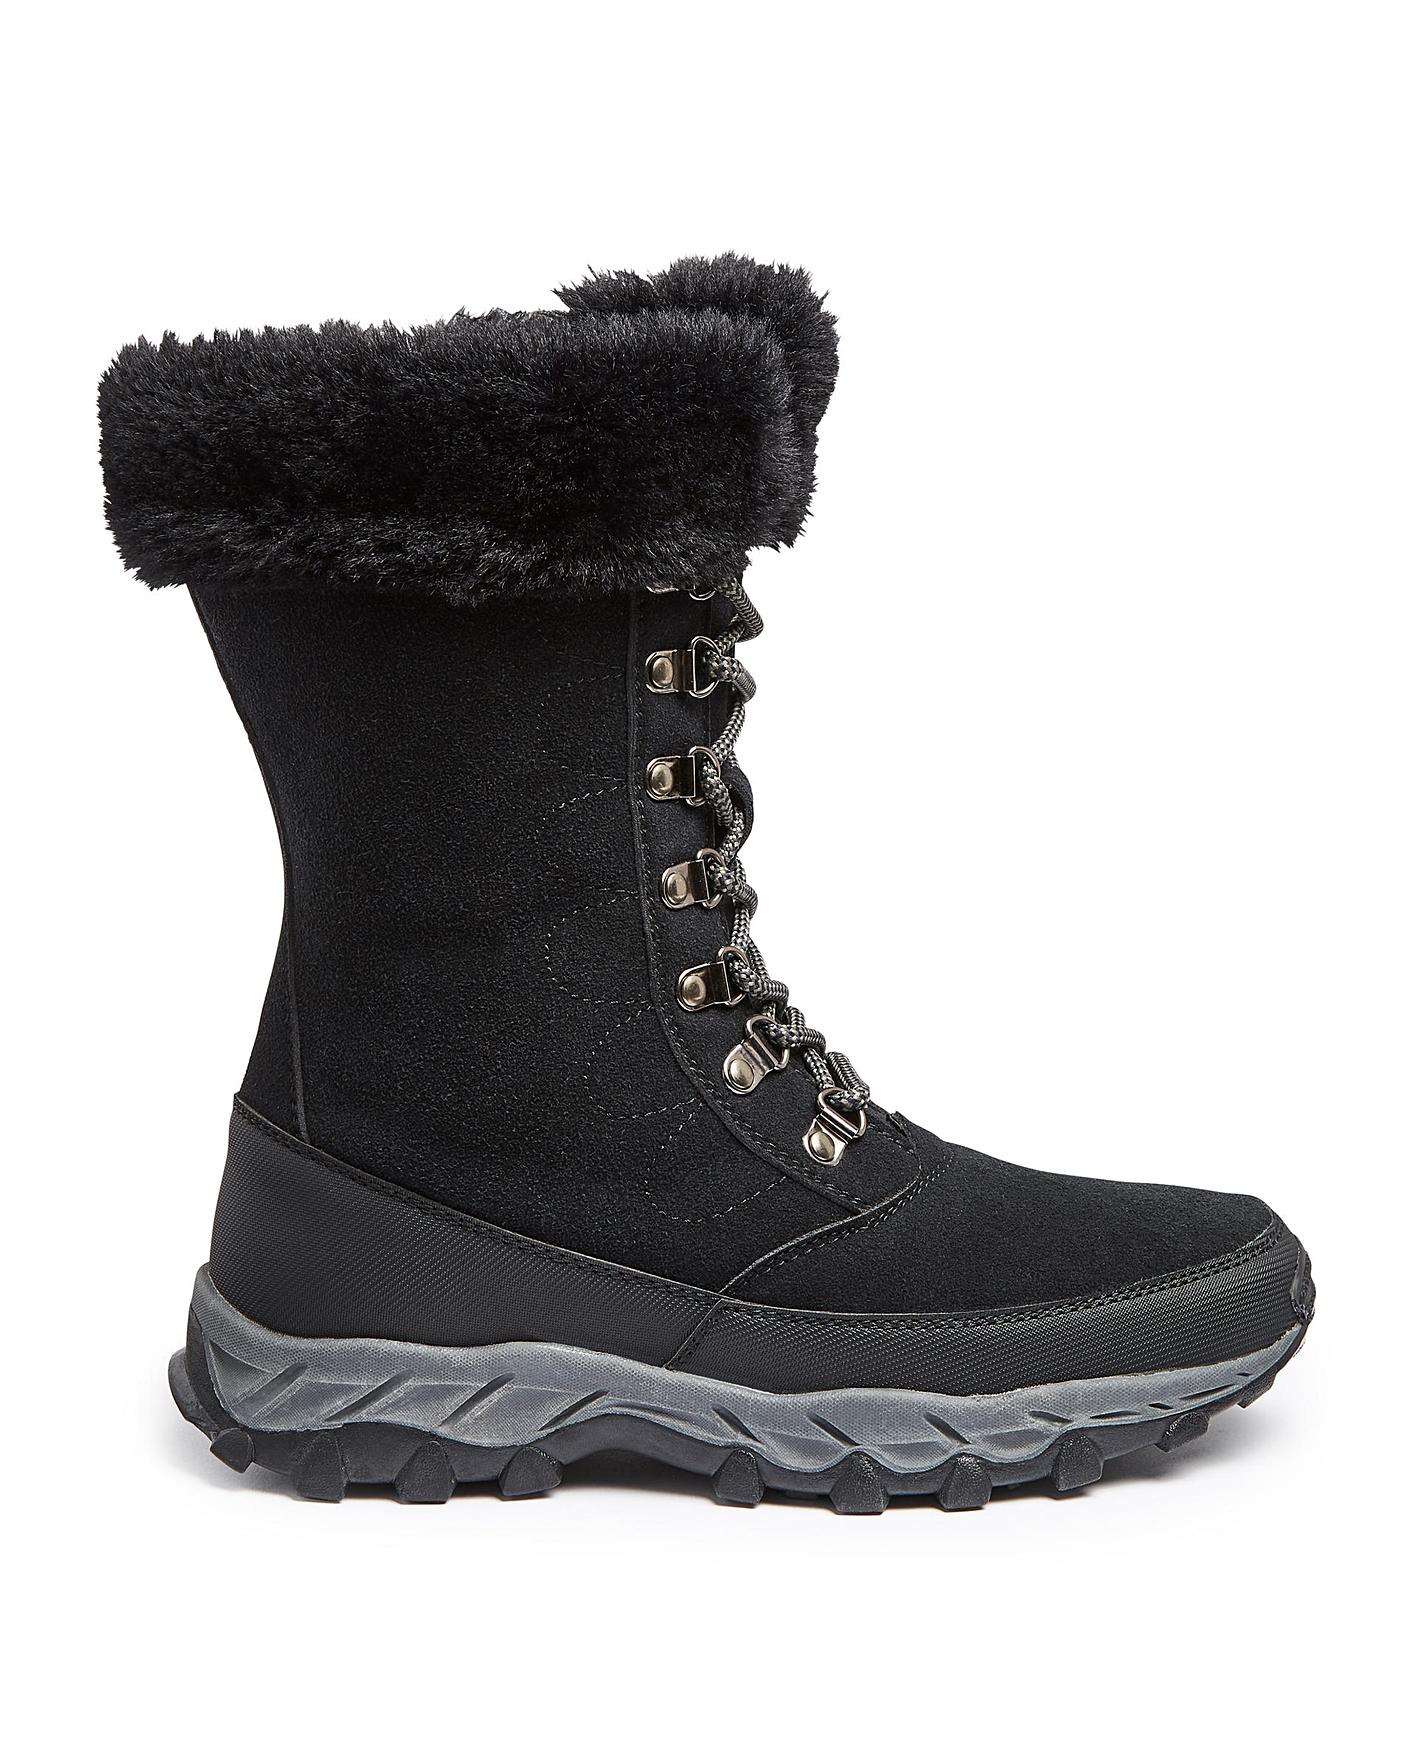 Snow Boots With Fur Trim Deals | bellvalefarms.com